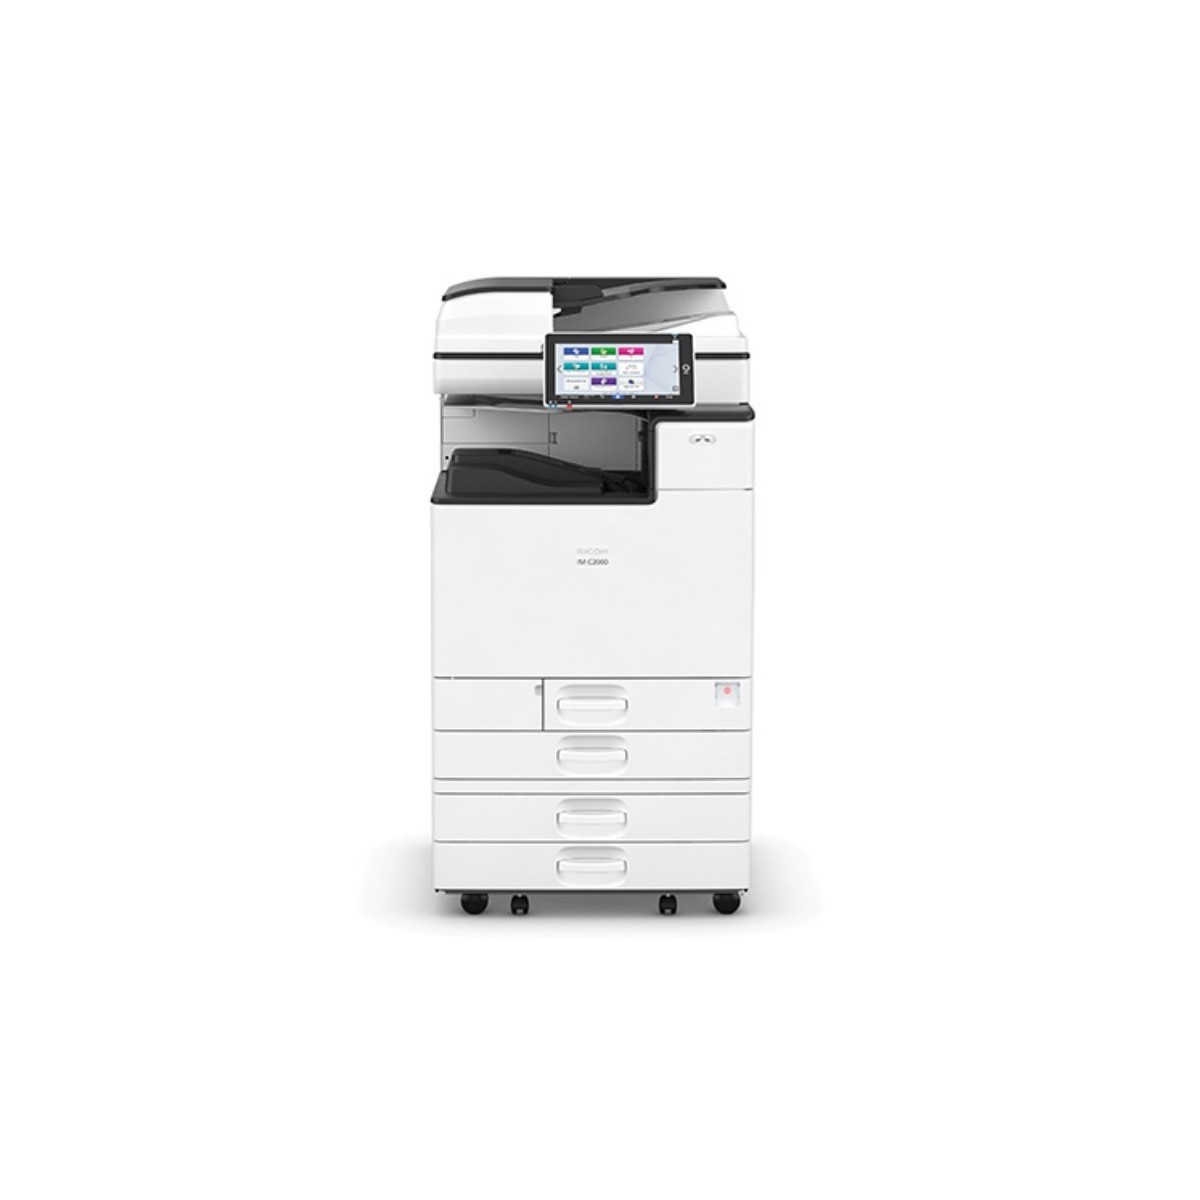 Ricoh IM C2000 - Laser - Colour printing - 1200 x 1200 DPI - Colour copying - Colour scanning - Direct printing